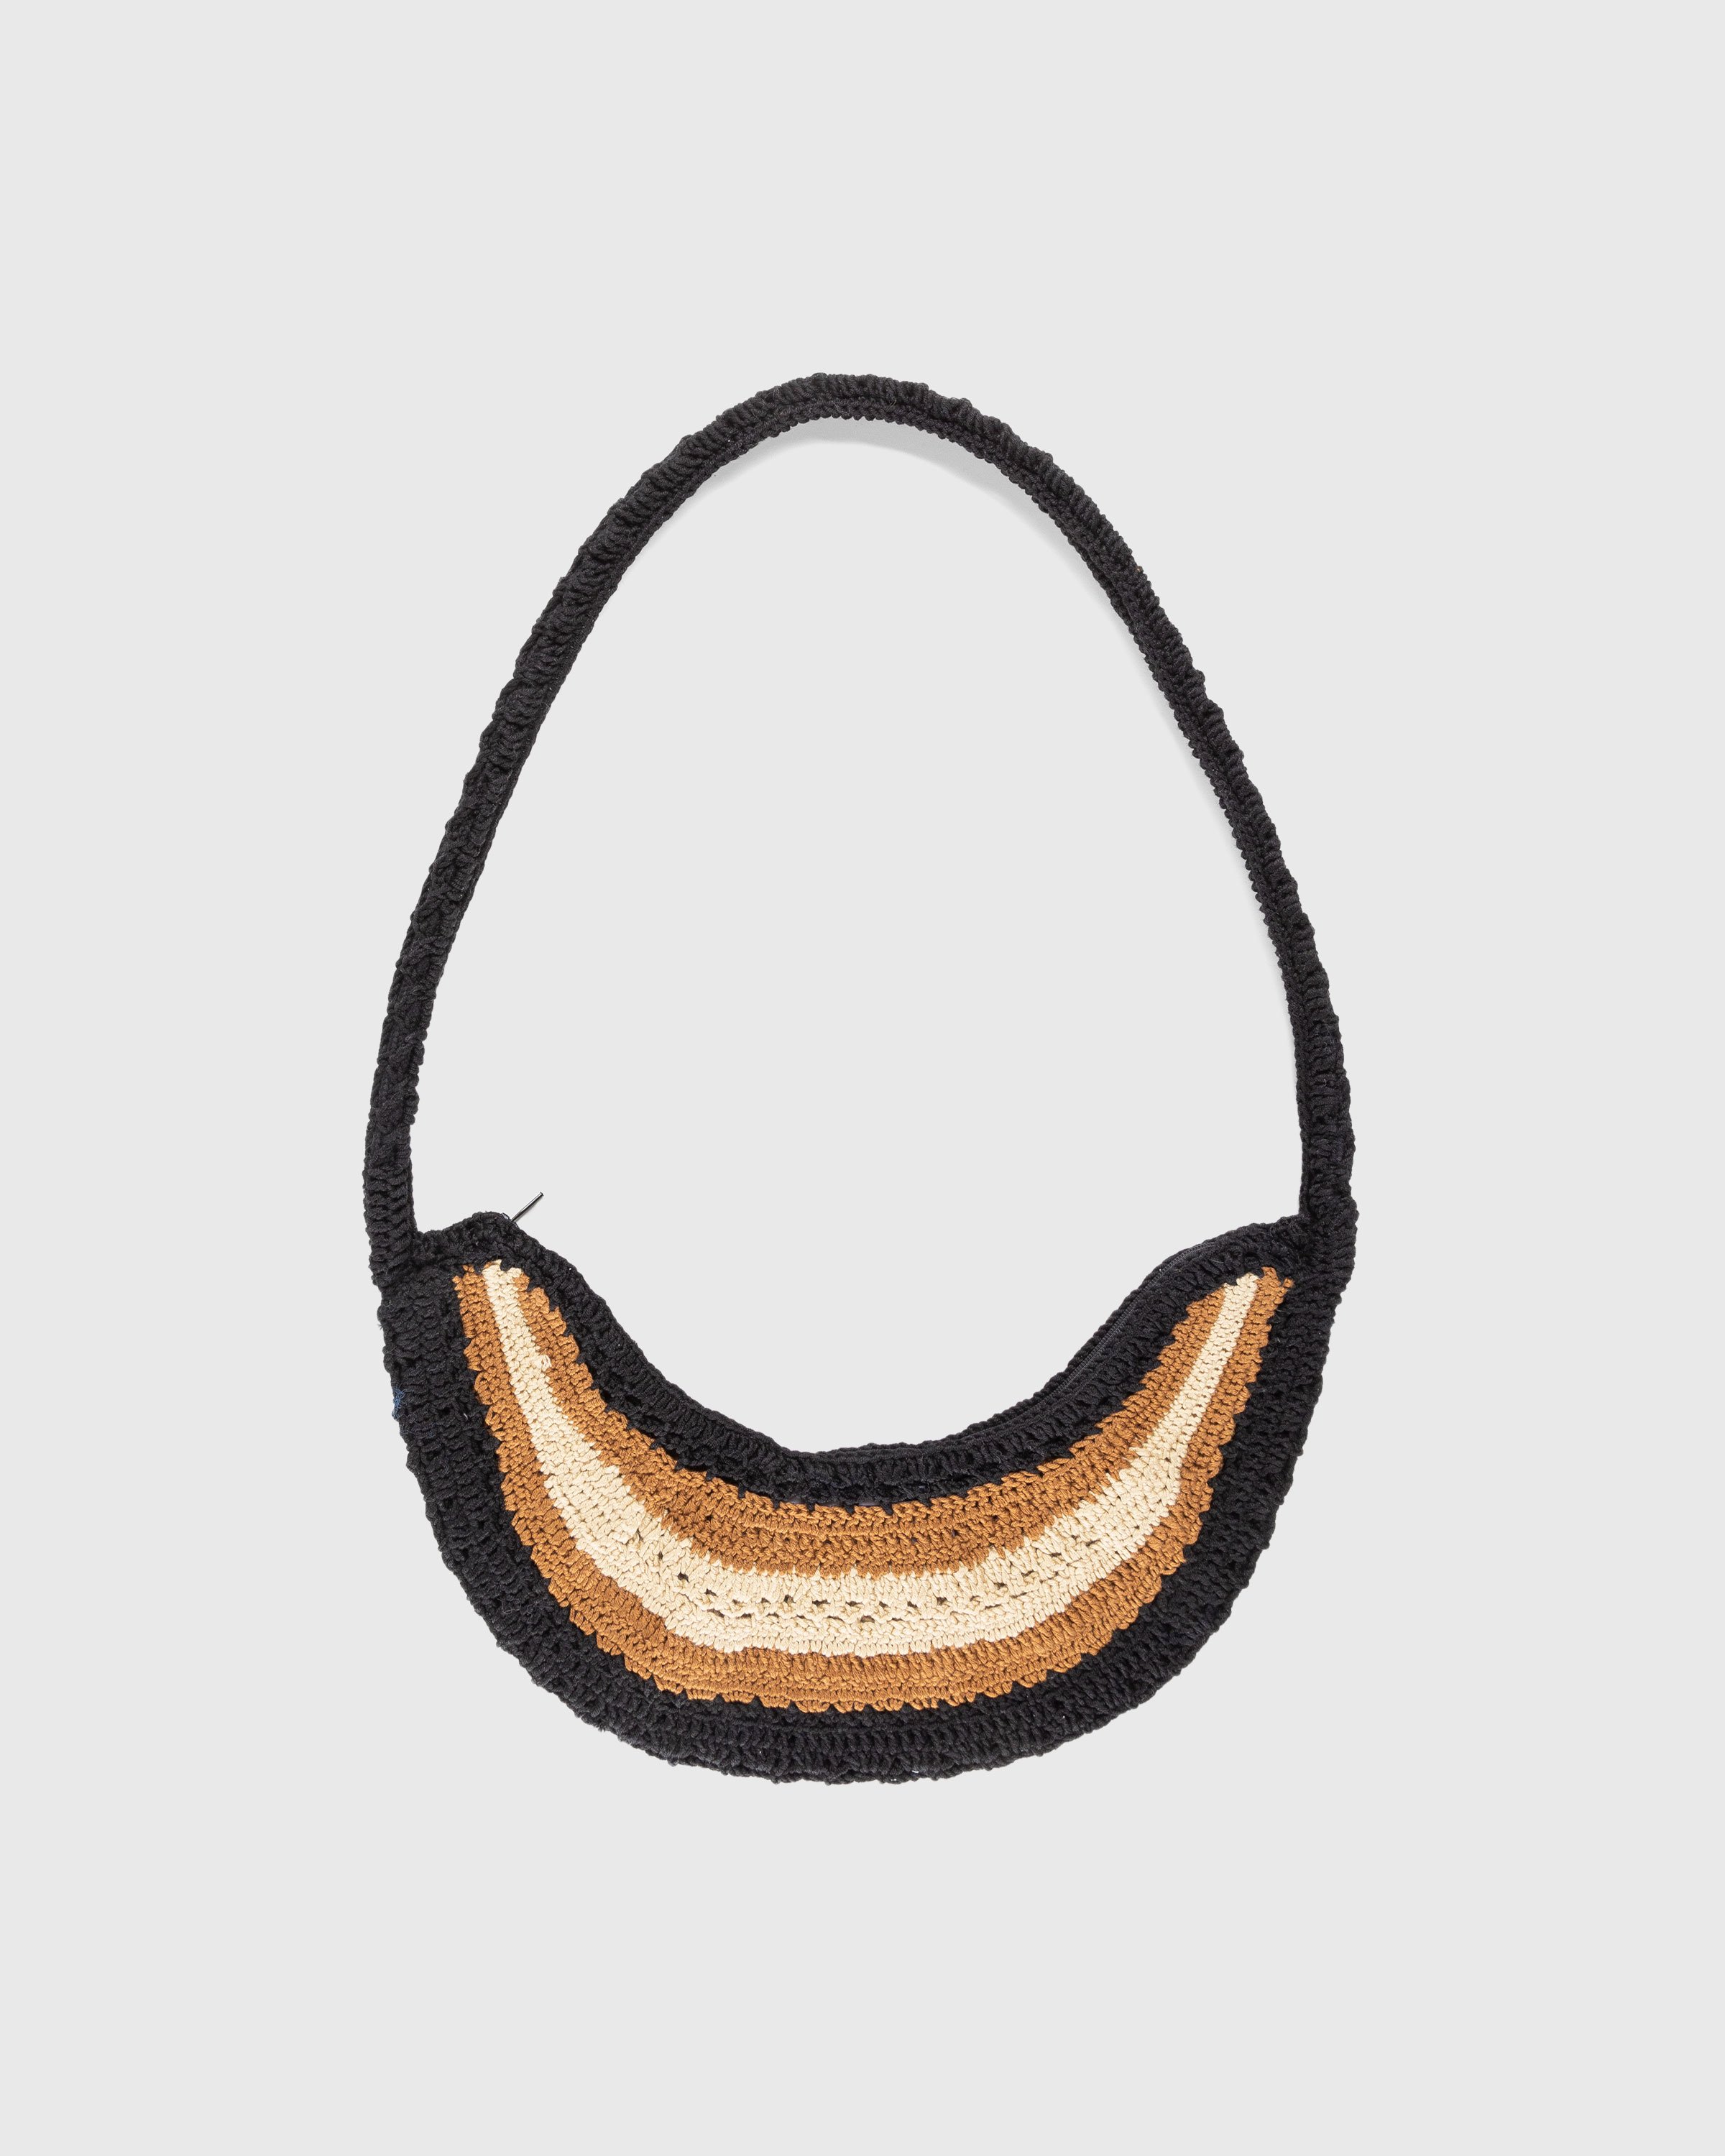 SSU - Crochet Arc Tote Bag Black/Brown - Accessories - Black - Image 1